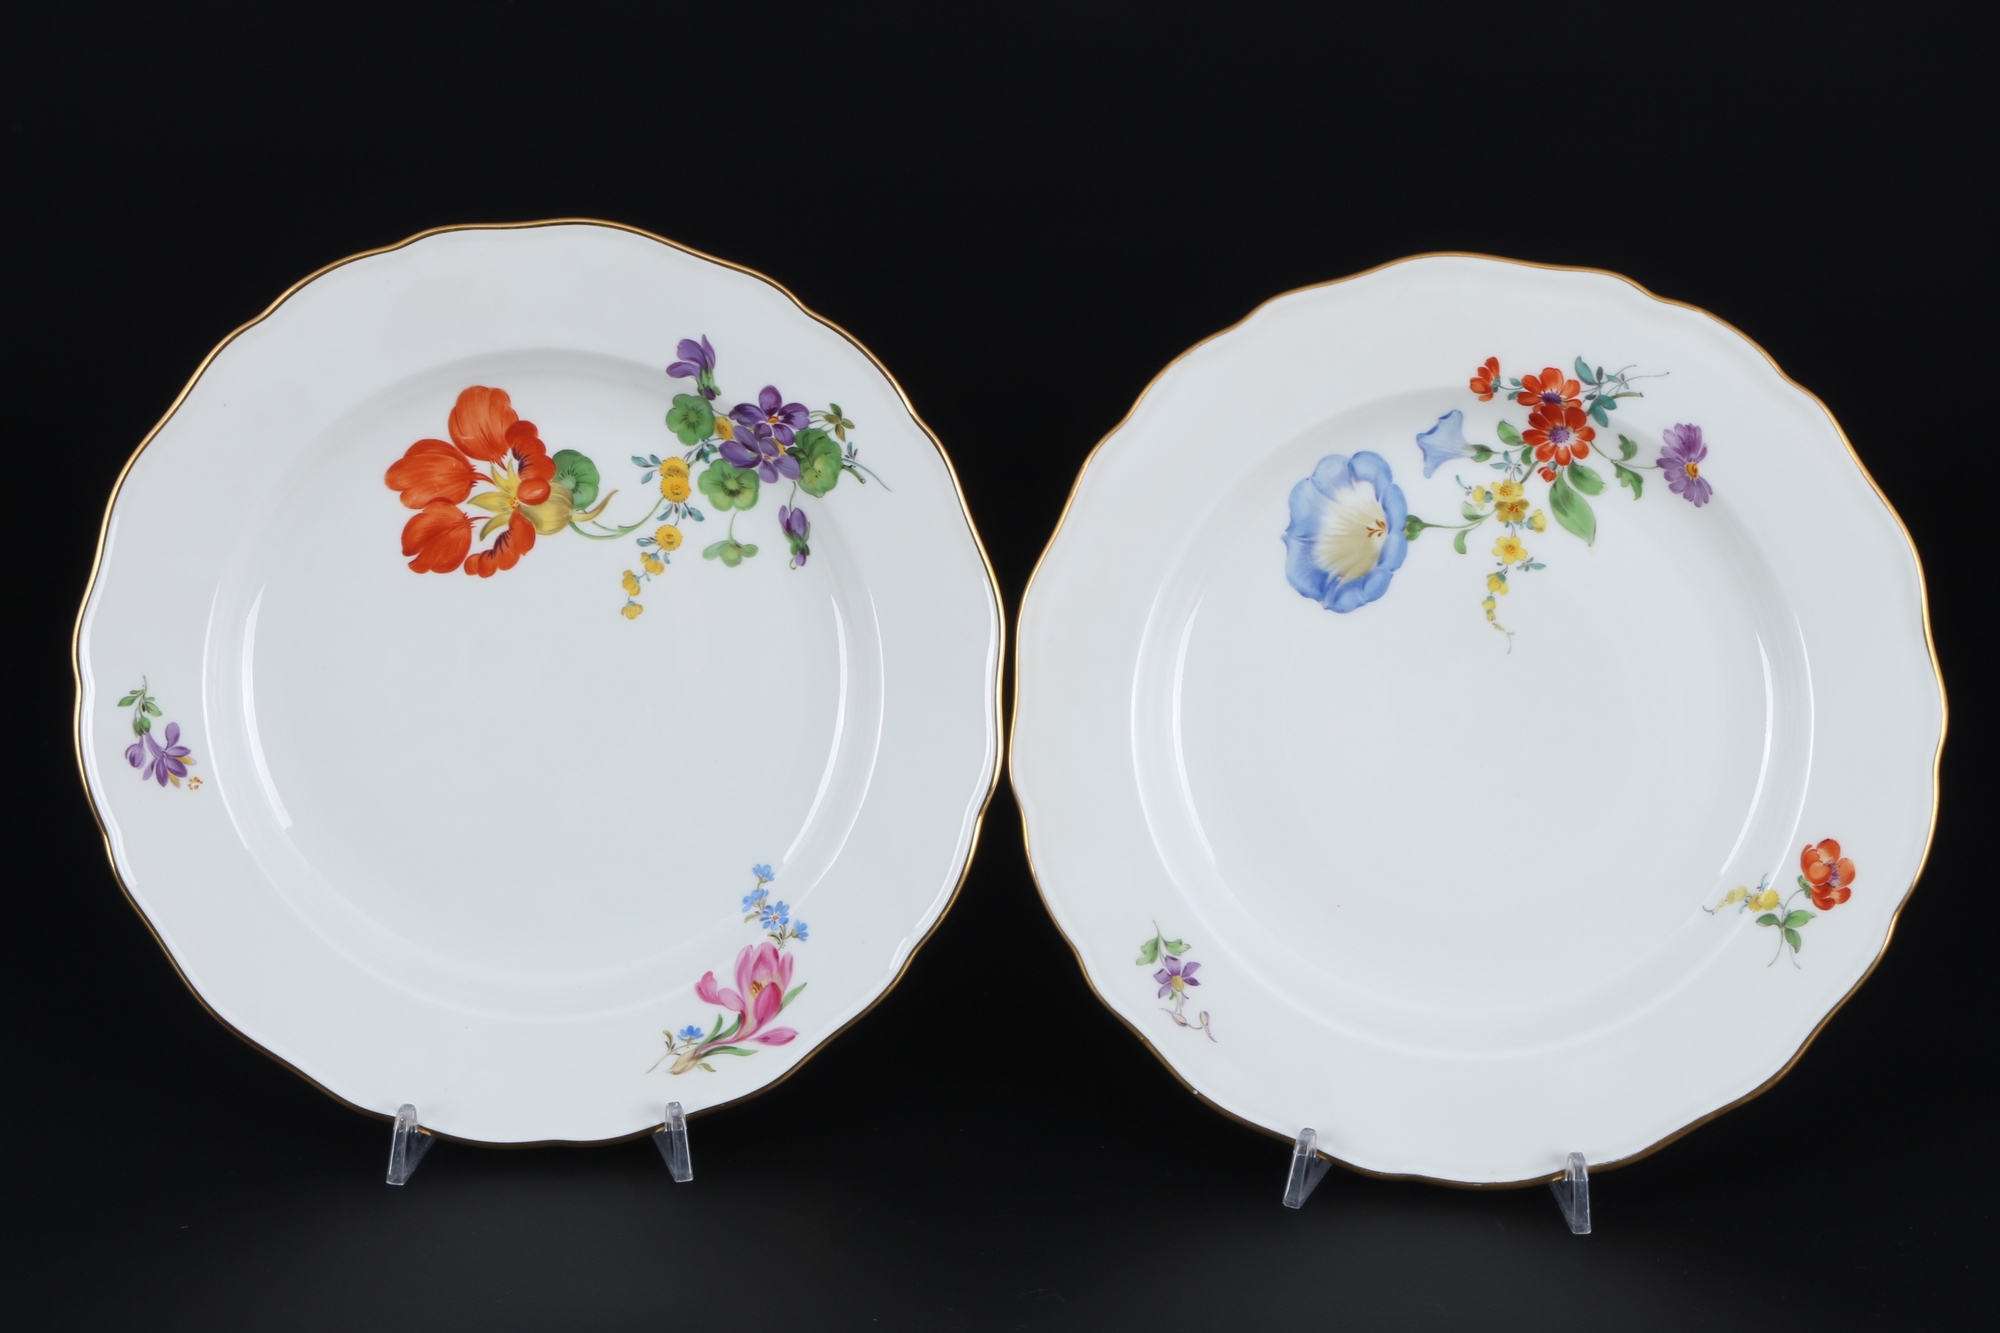 Meissen Blume 5 große Speiseteller und 5 mittlere Teller 1.Wahl, large and small dining plates, - Image 6 of 7